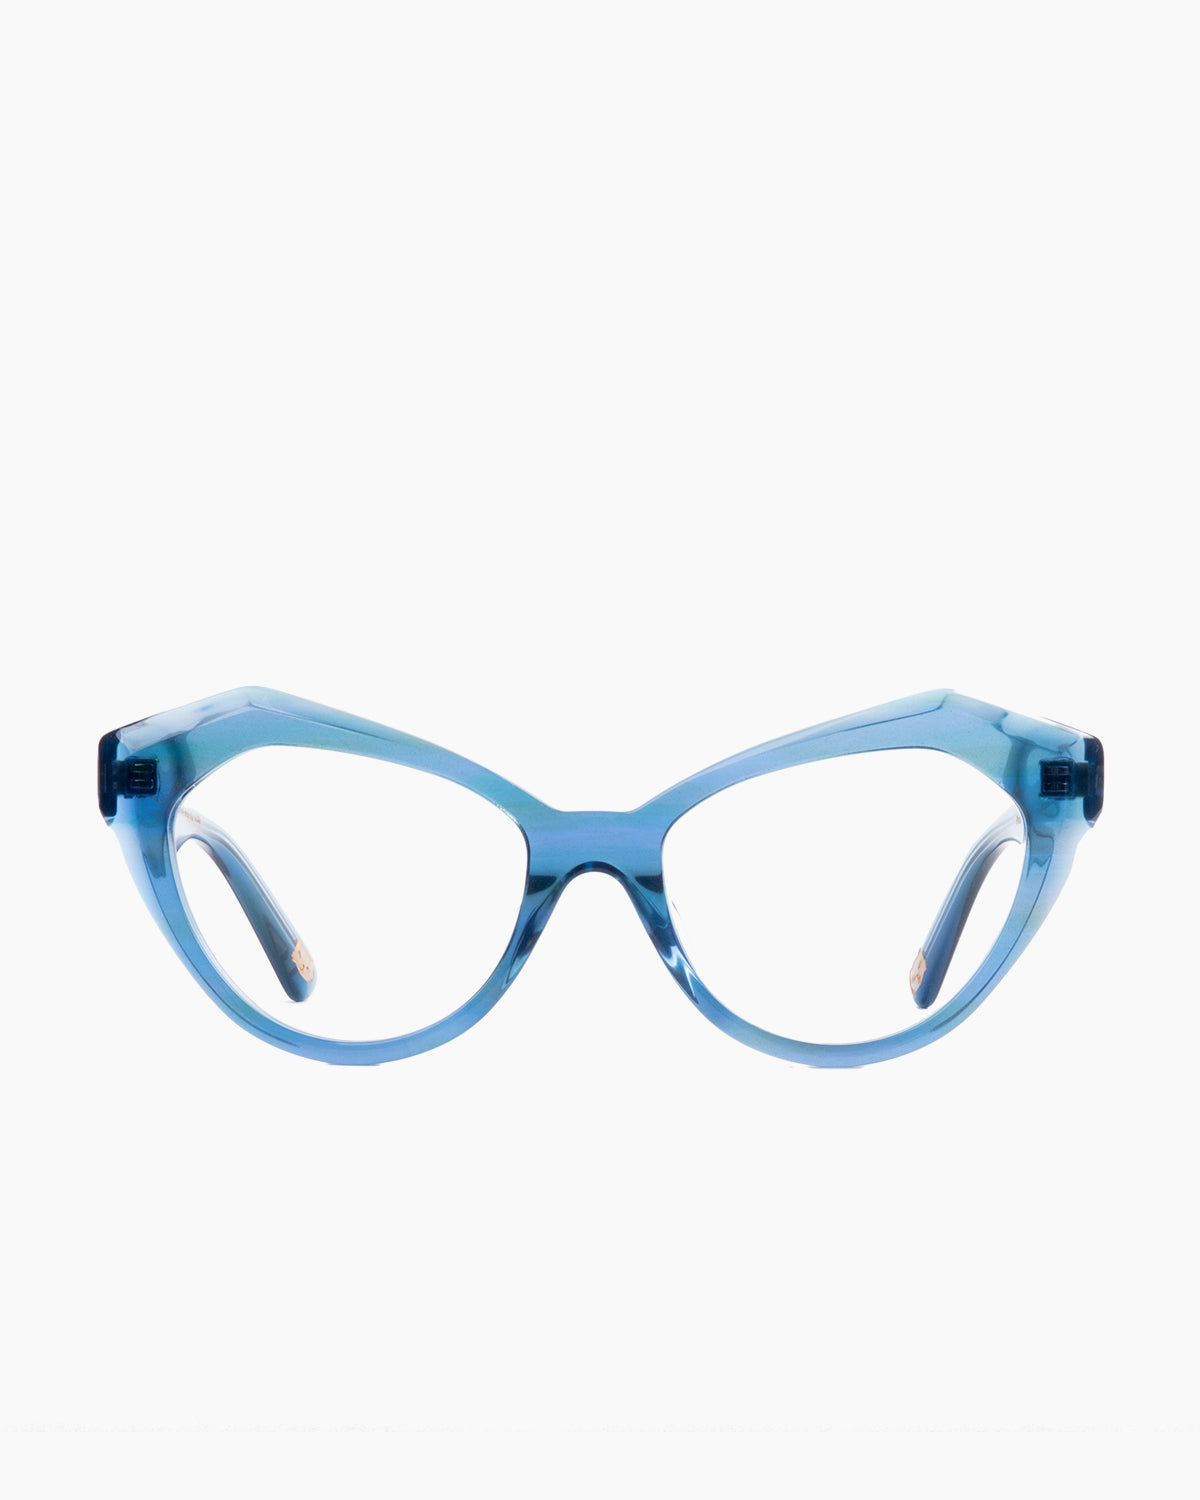 Spectacleeyeworks - Ayalah - c456 | Bar à lunettes:  Marie-Sophie Dion